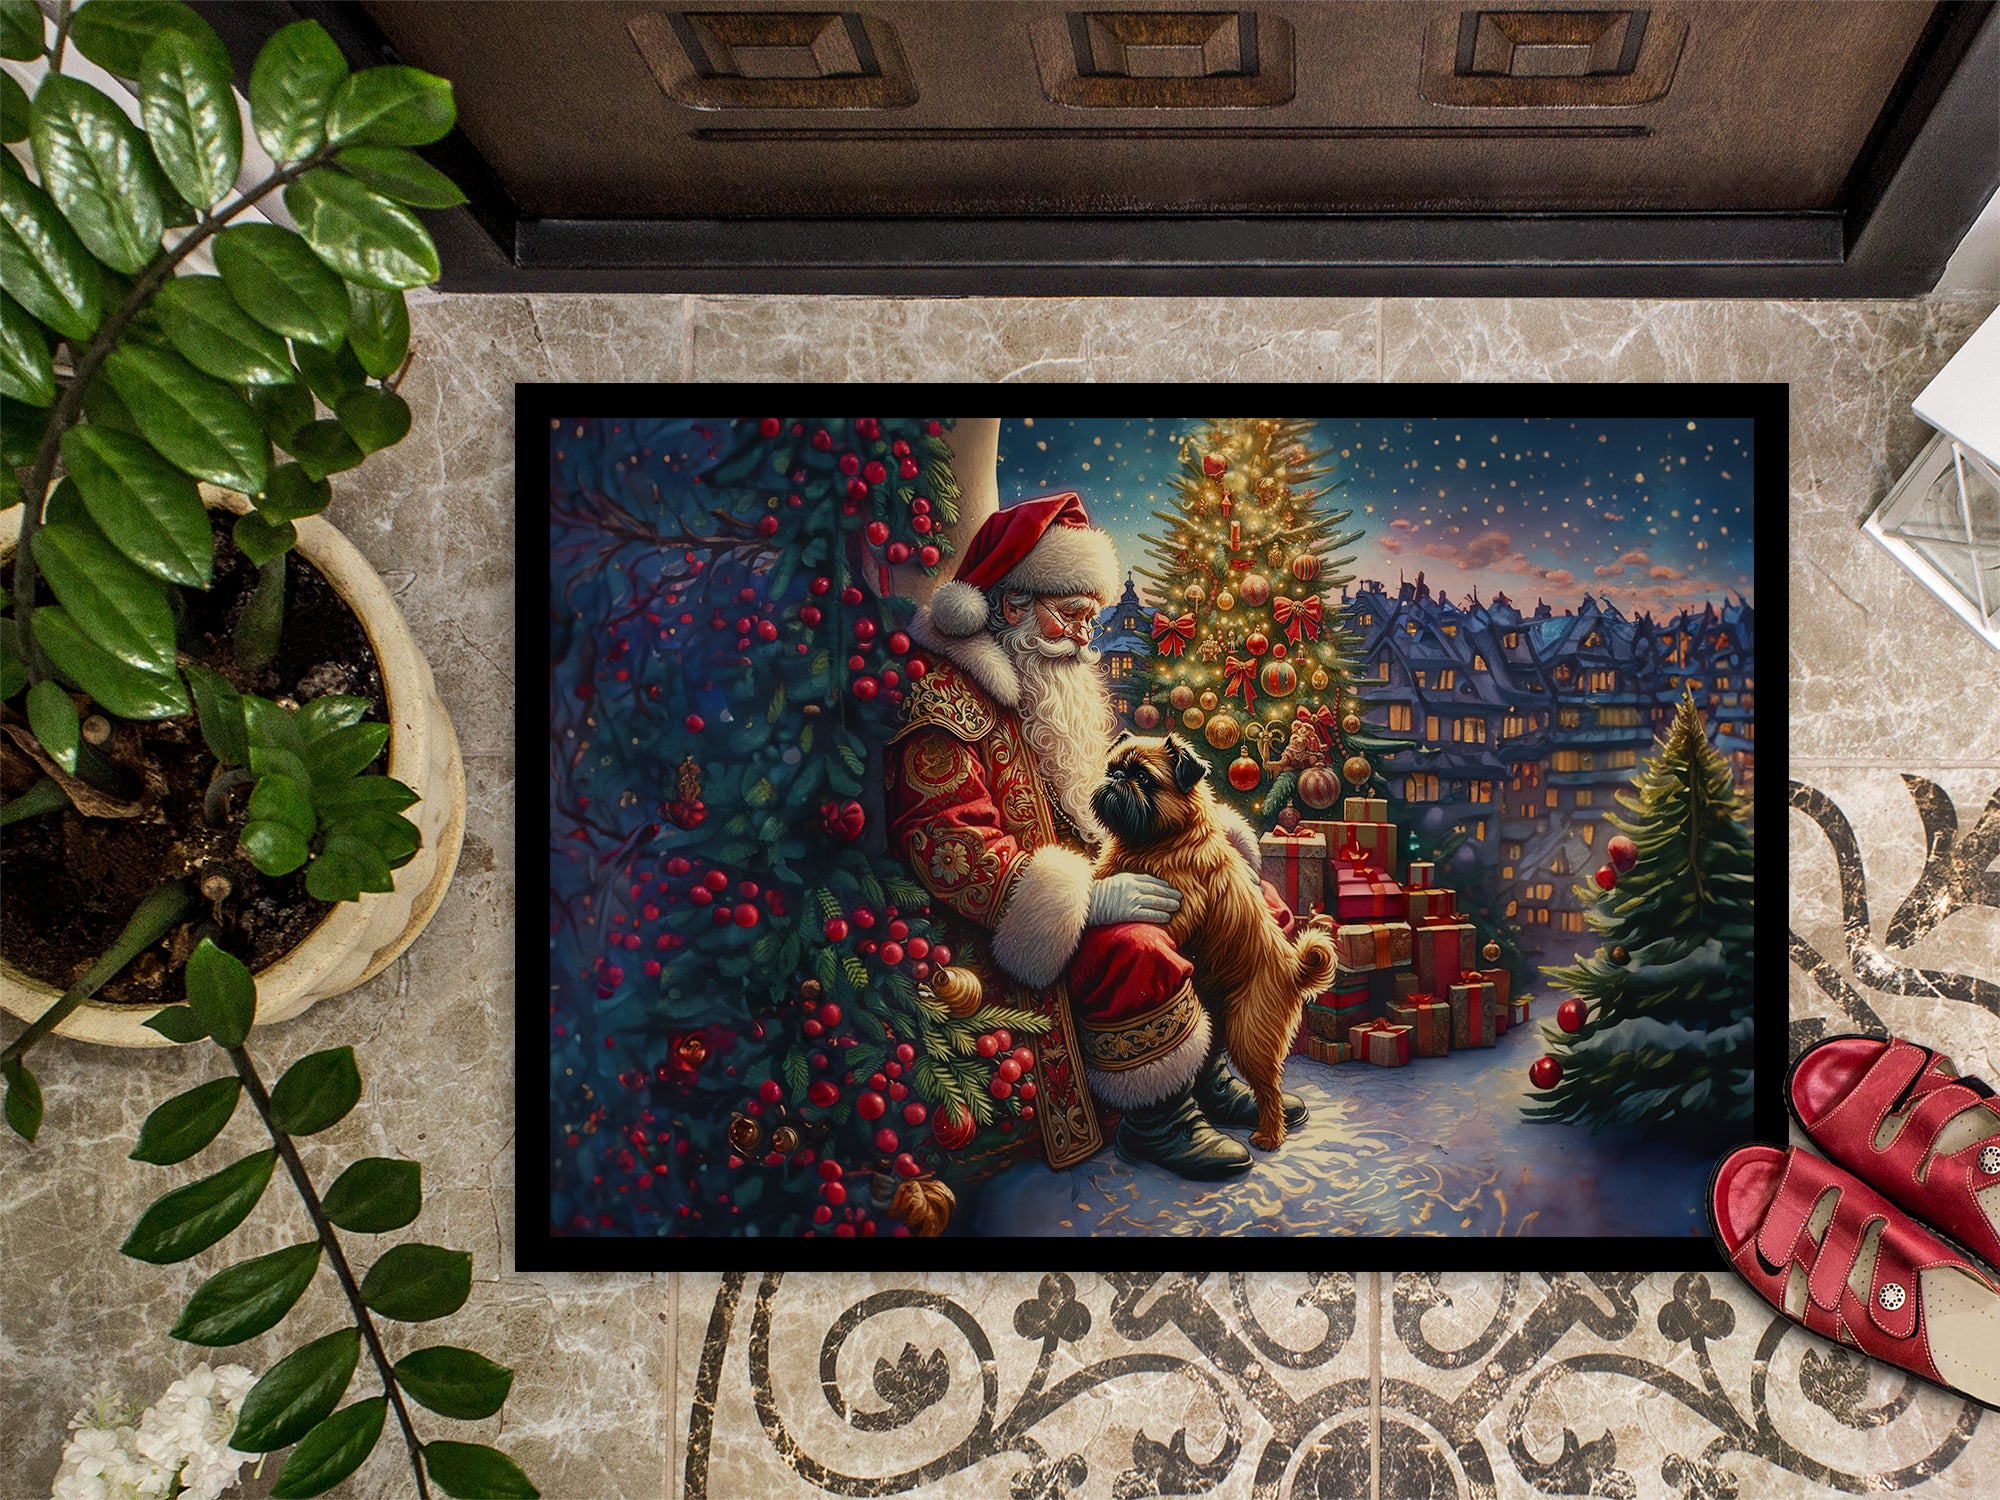 Brussels Griffon and Santa Claus Doormat